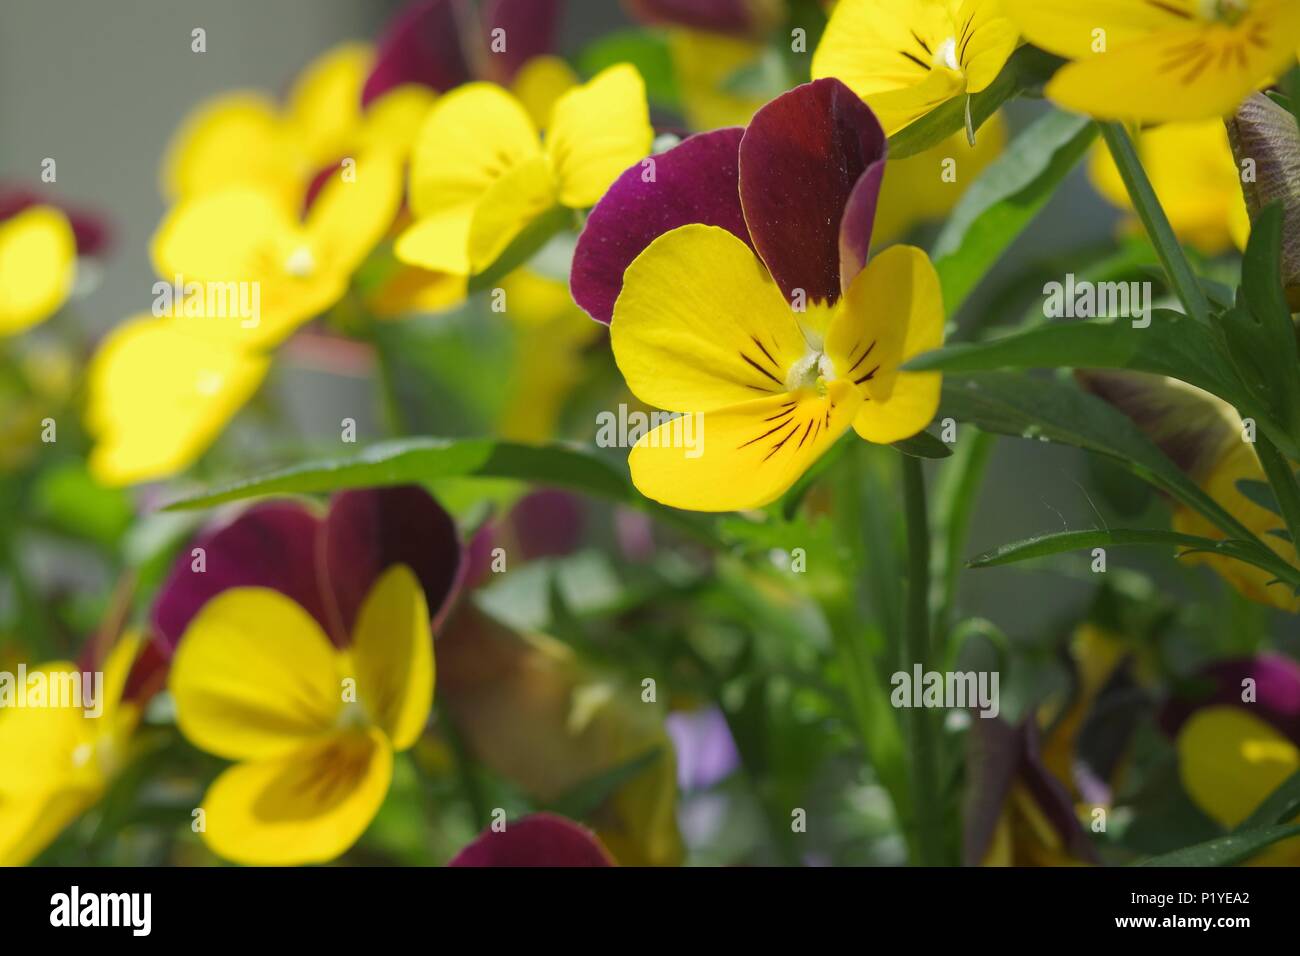 yellow and purple pansies Stock Photo